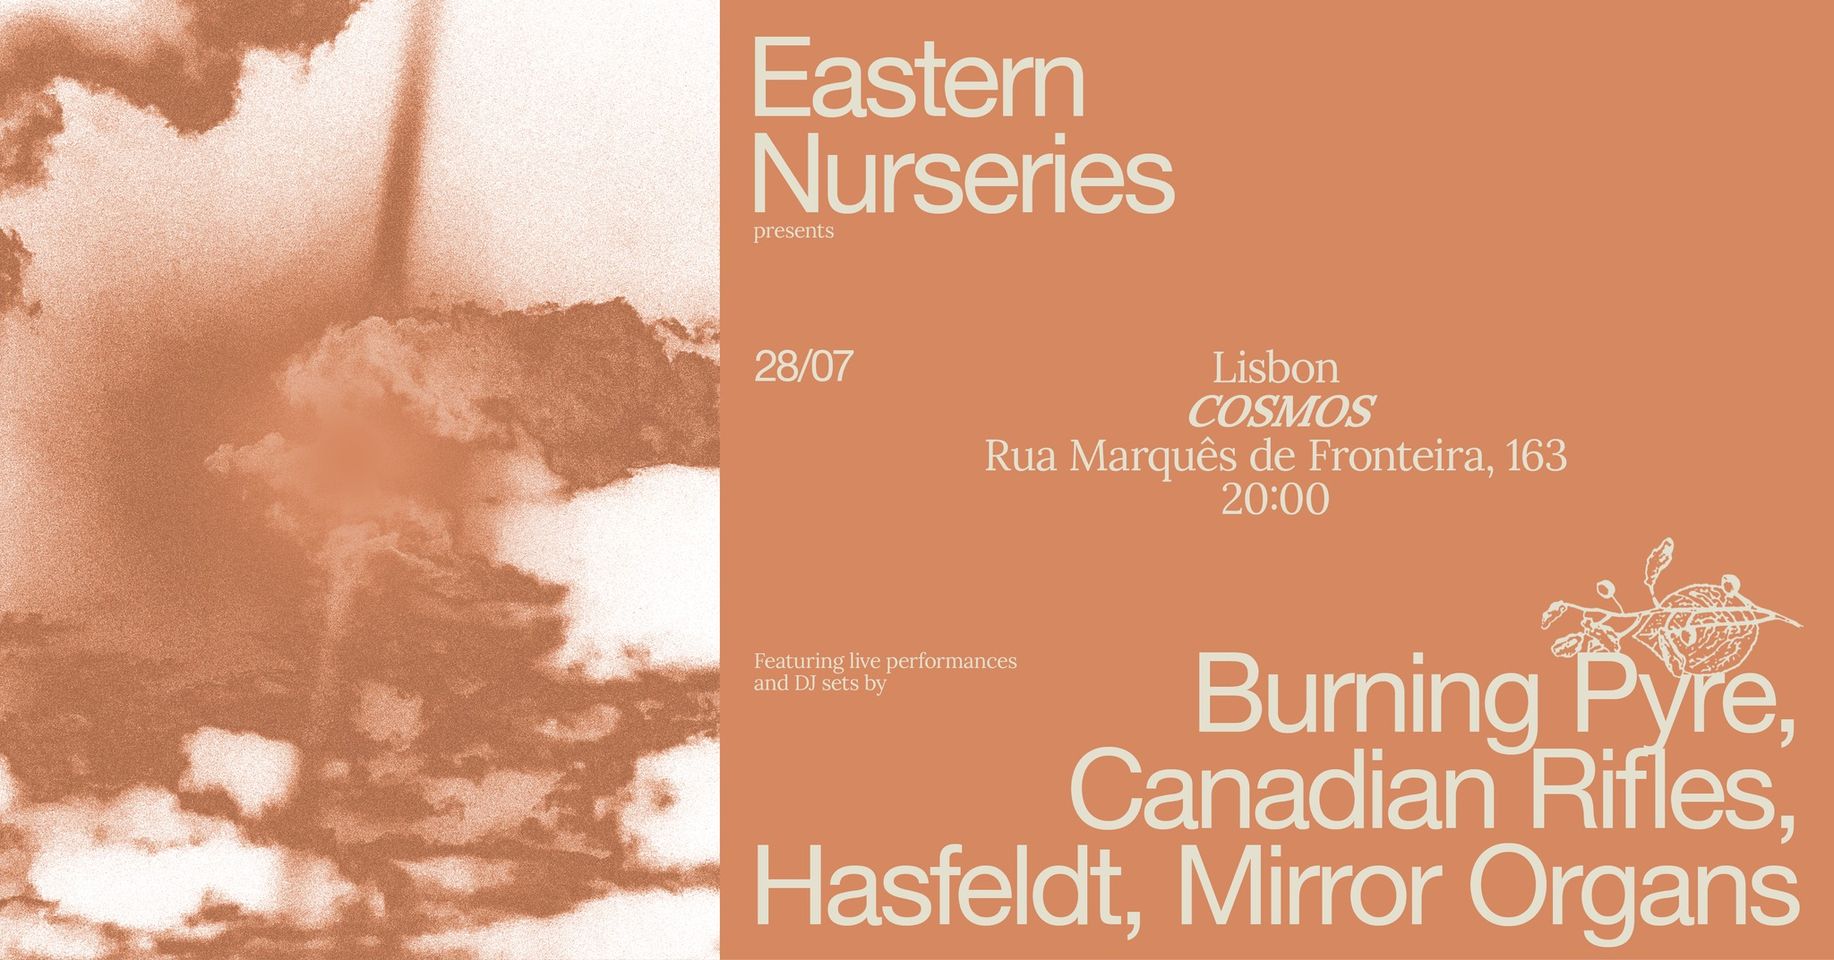 Eastern Nurseries Showcase Burning Pyre, Canadian Rifles, Hasfeldt, Mirror Organs